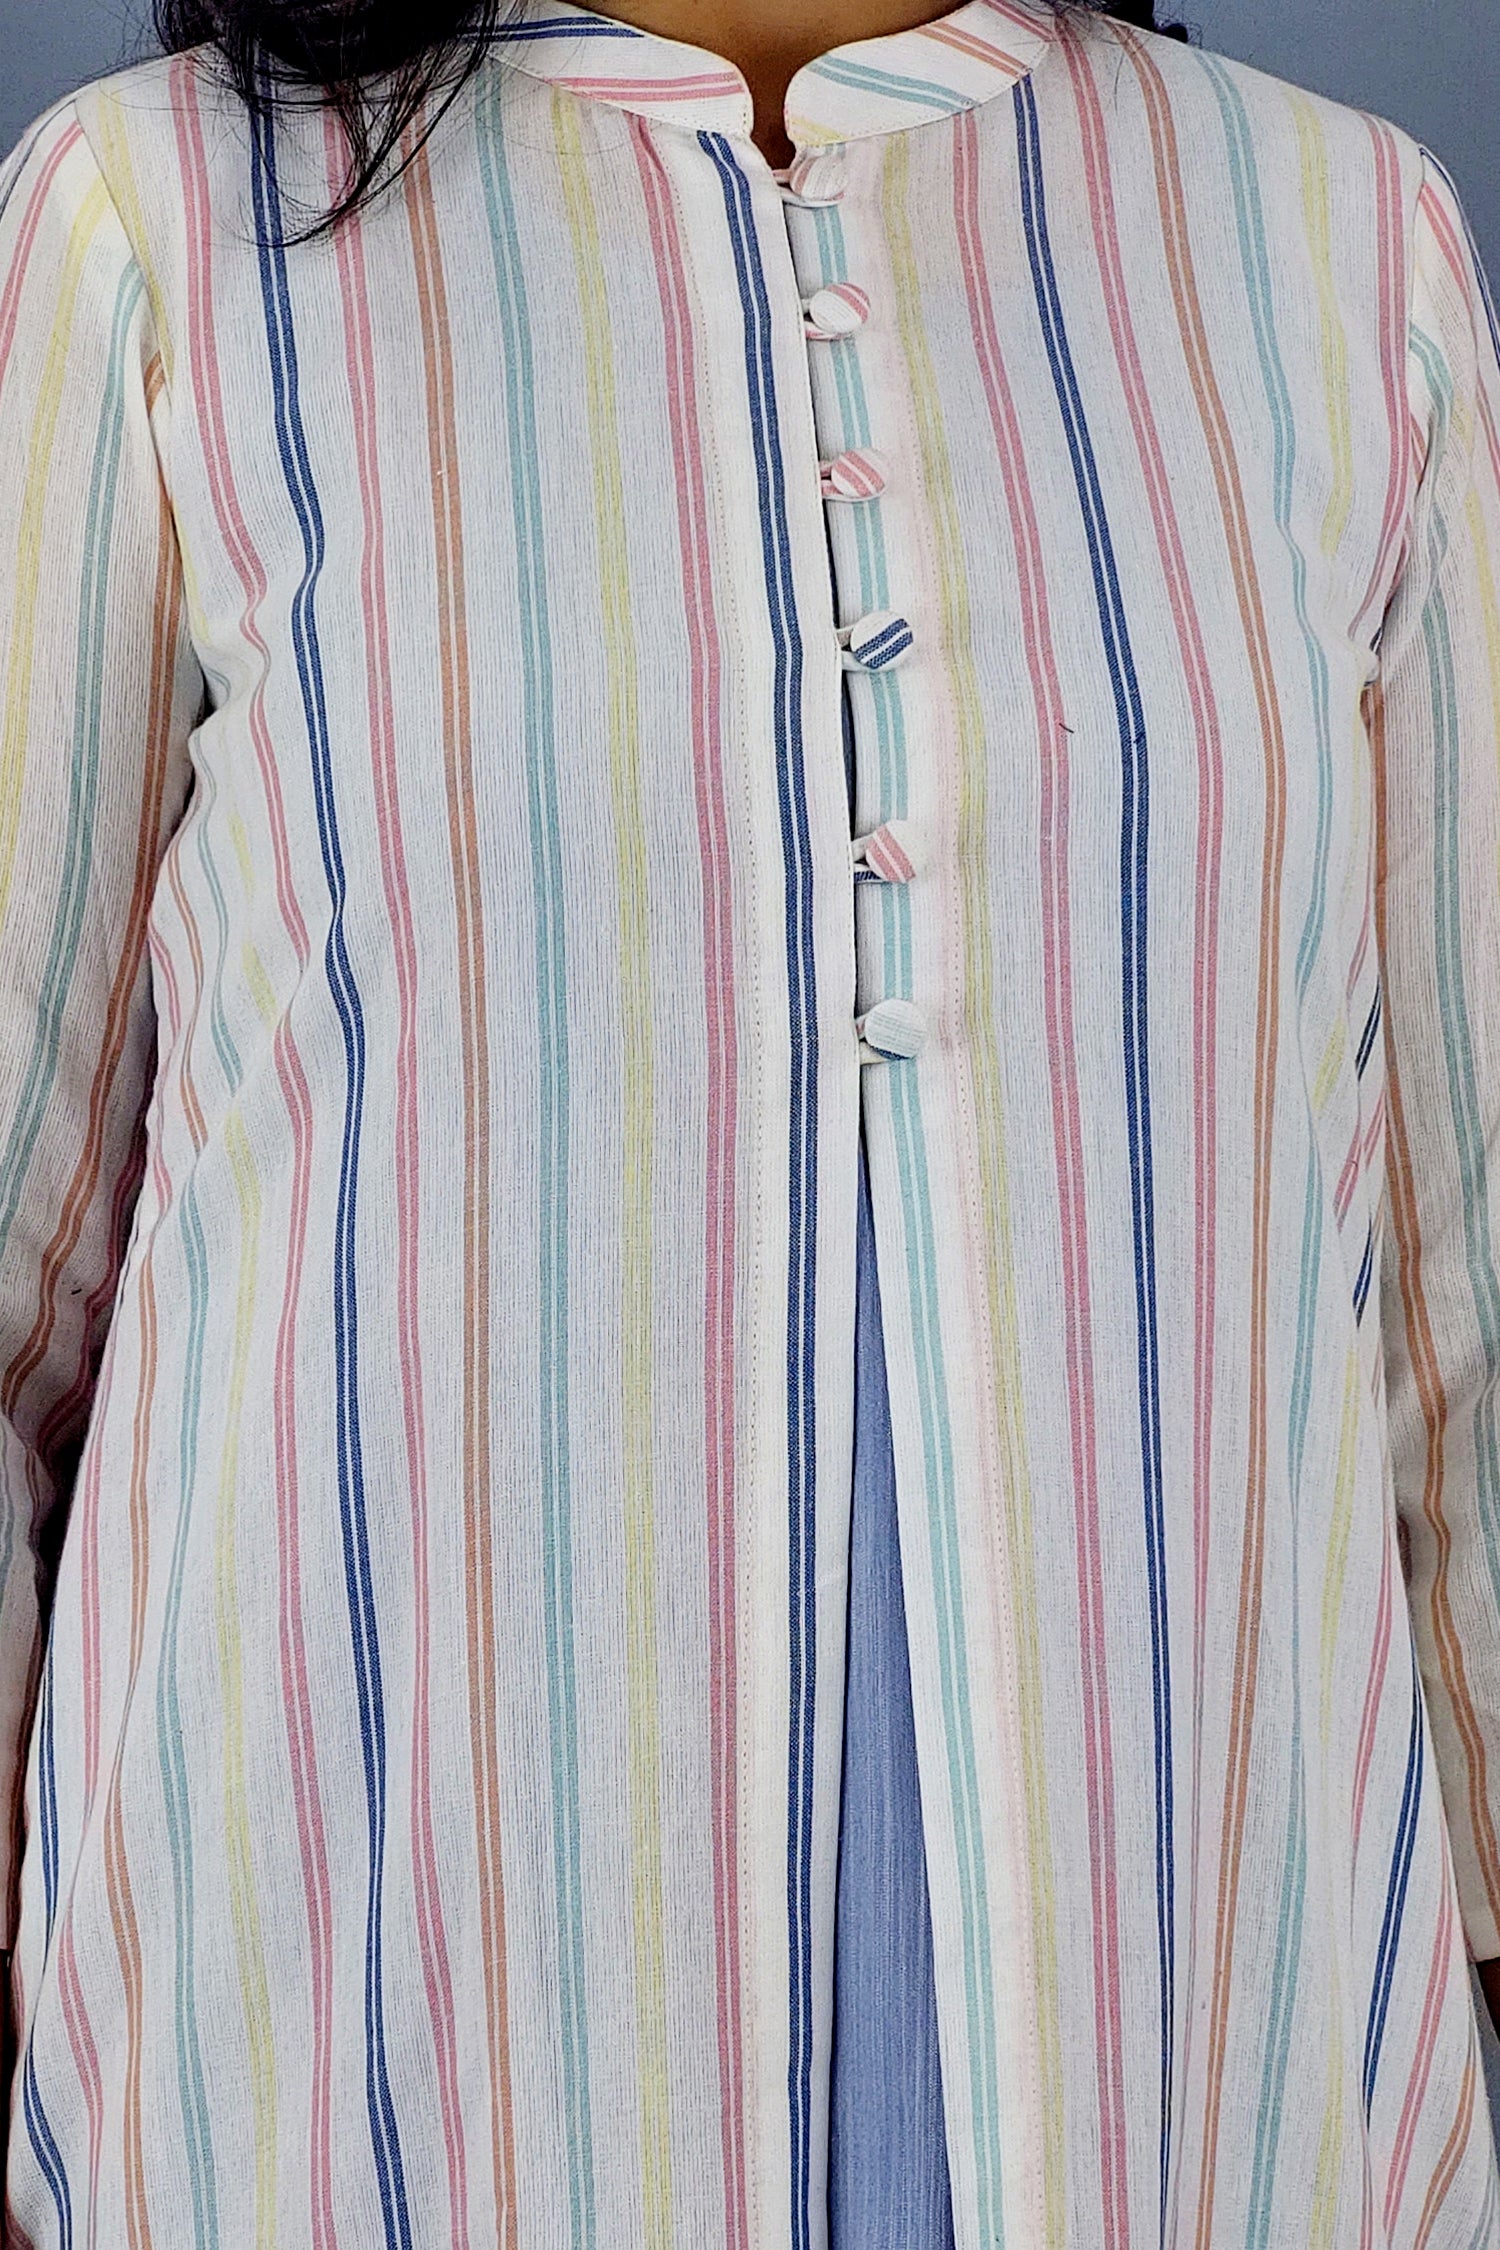 Geometrical Digital Print Modal Satin Shirt Shirt Geometrical Digital Print Modal Satin Shirt Shirt Dress cum Kurta with Printed Cotton Shrug- Set of 2 Dress 